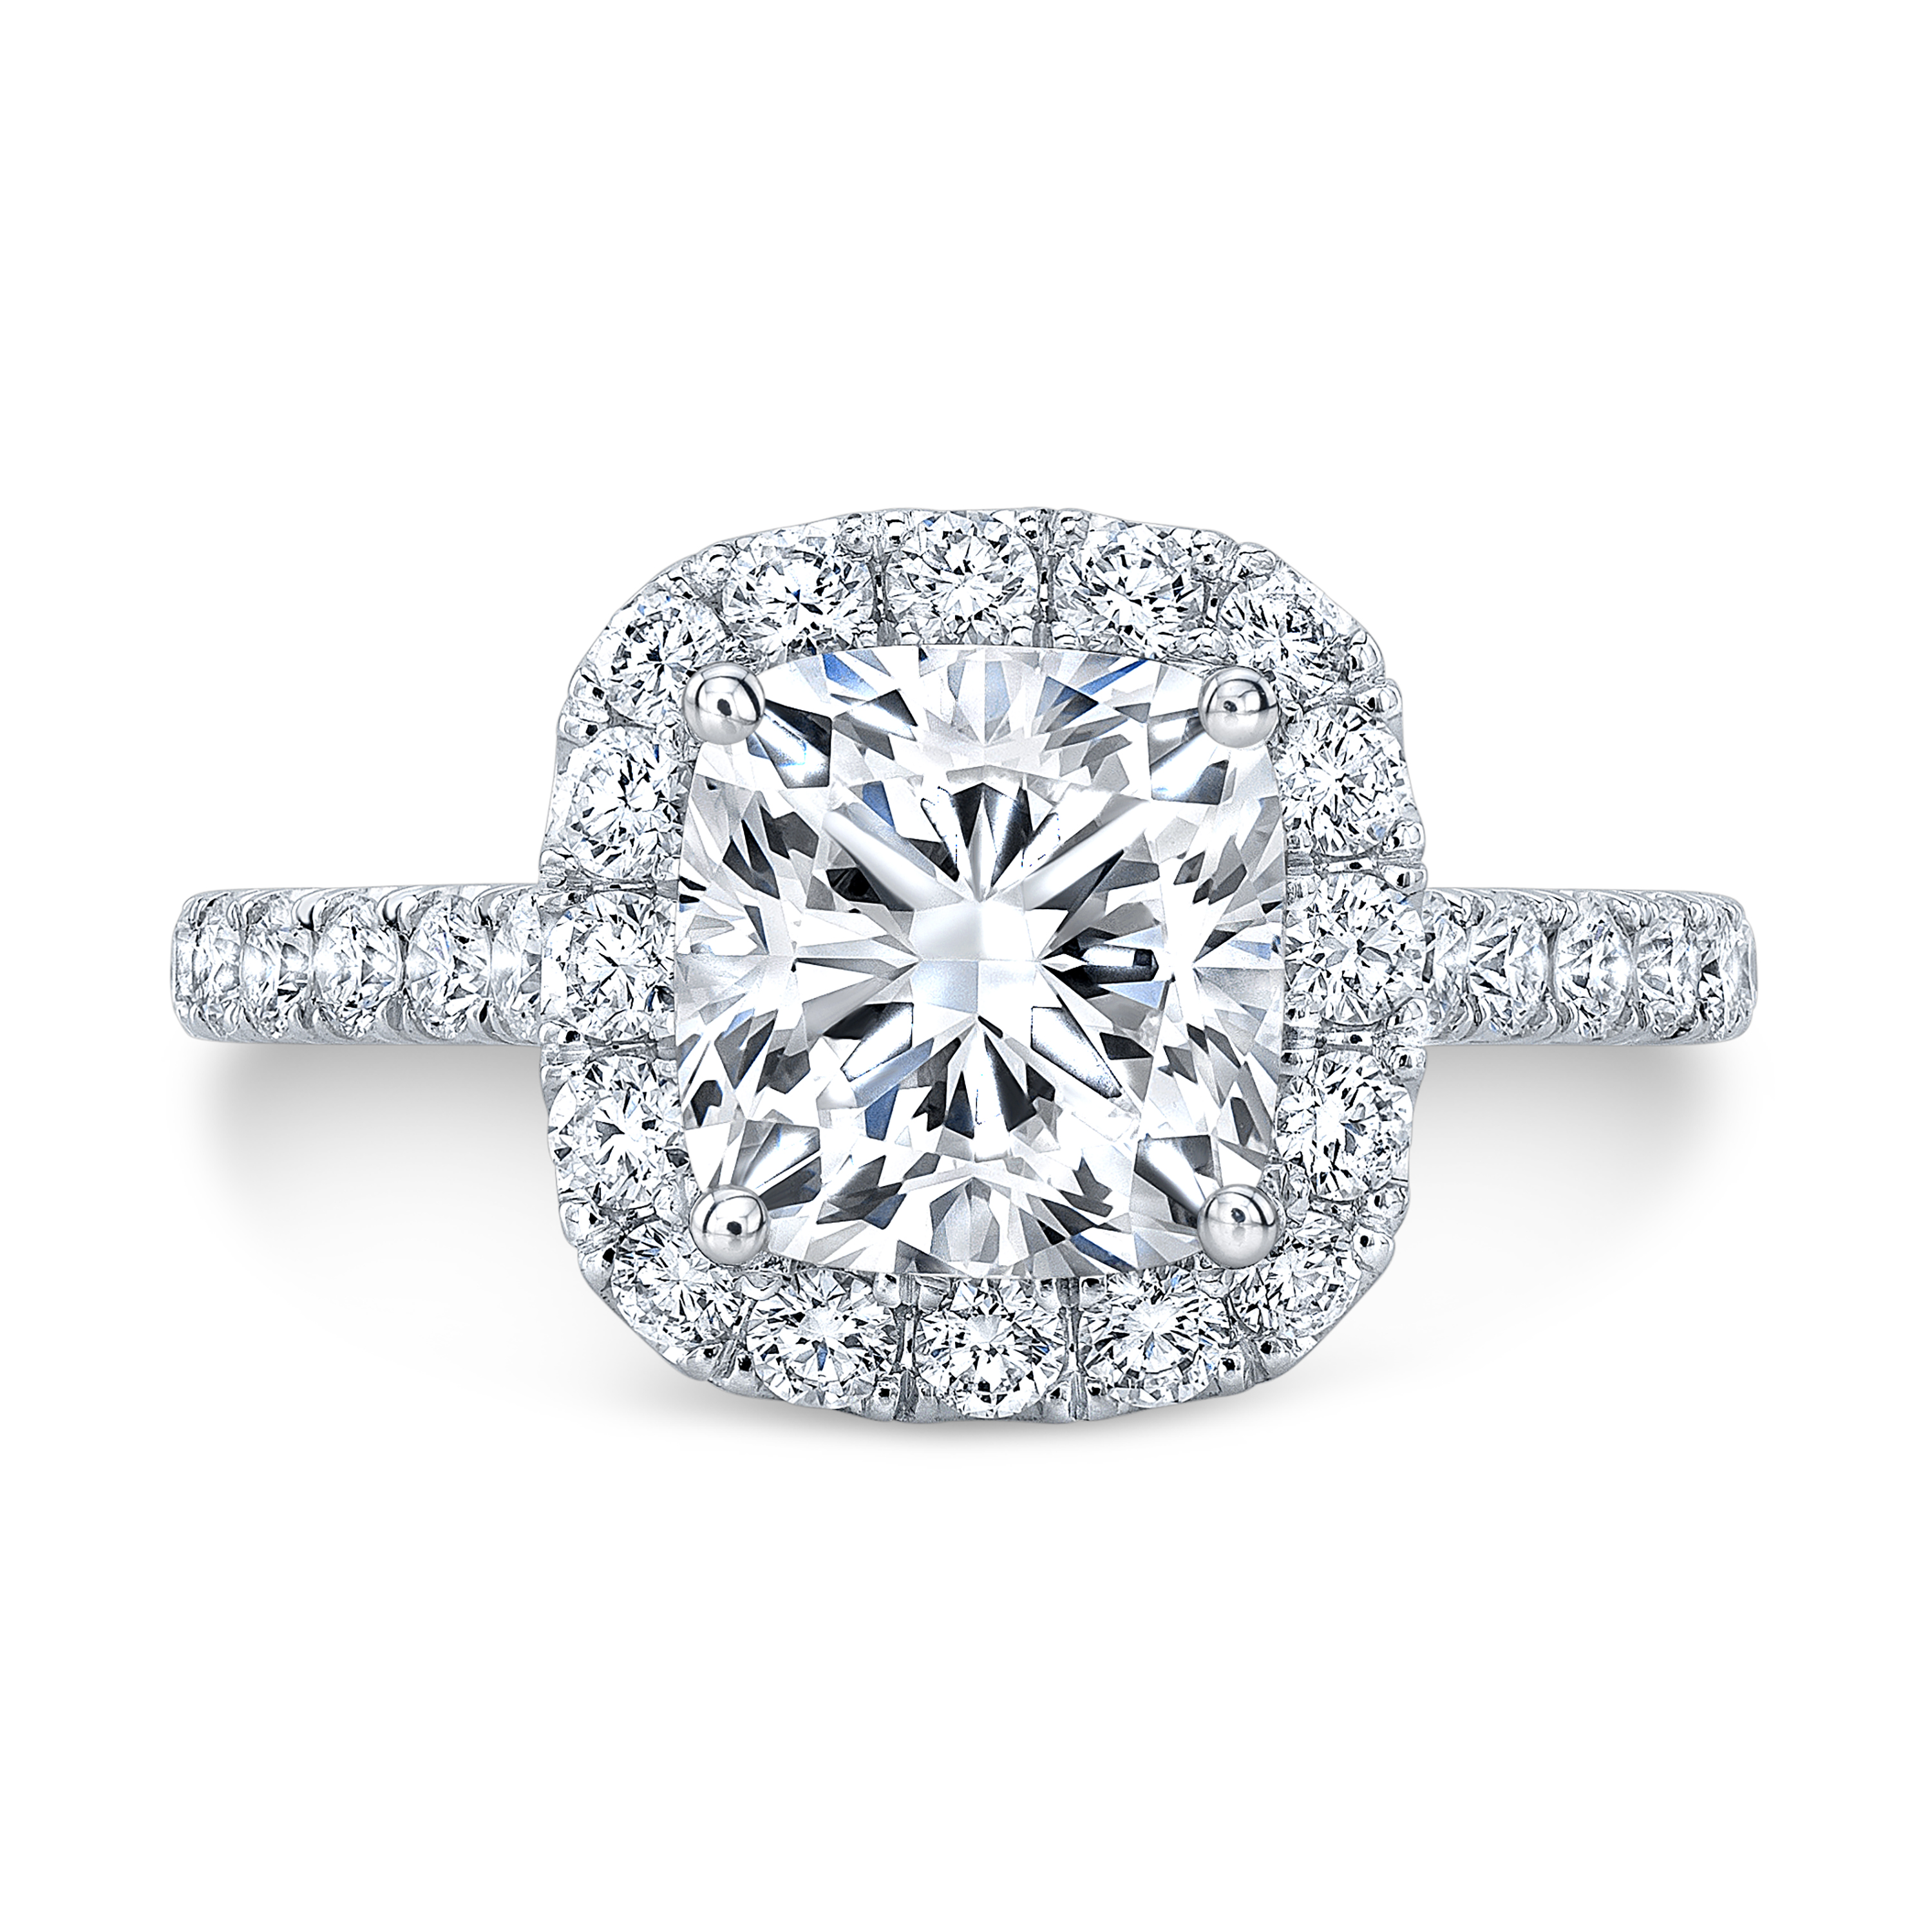 The Tiffany Diamond Has A Joyful New Setting